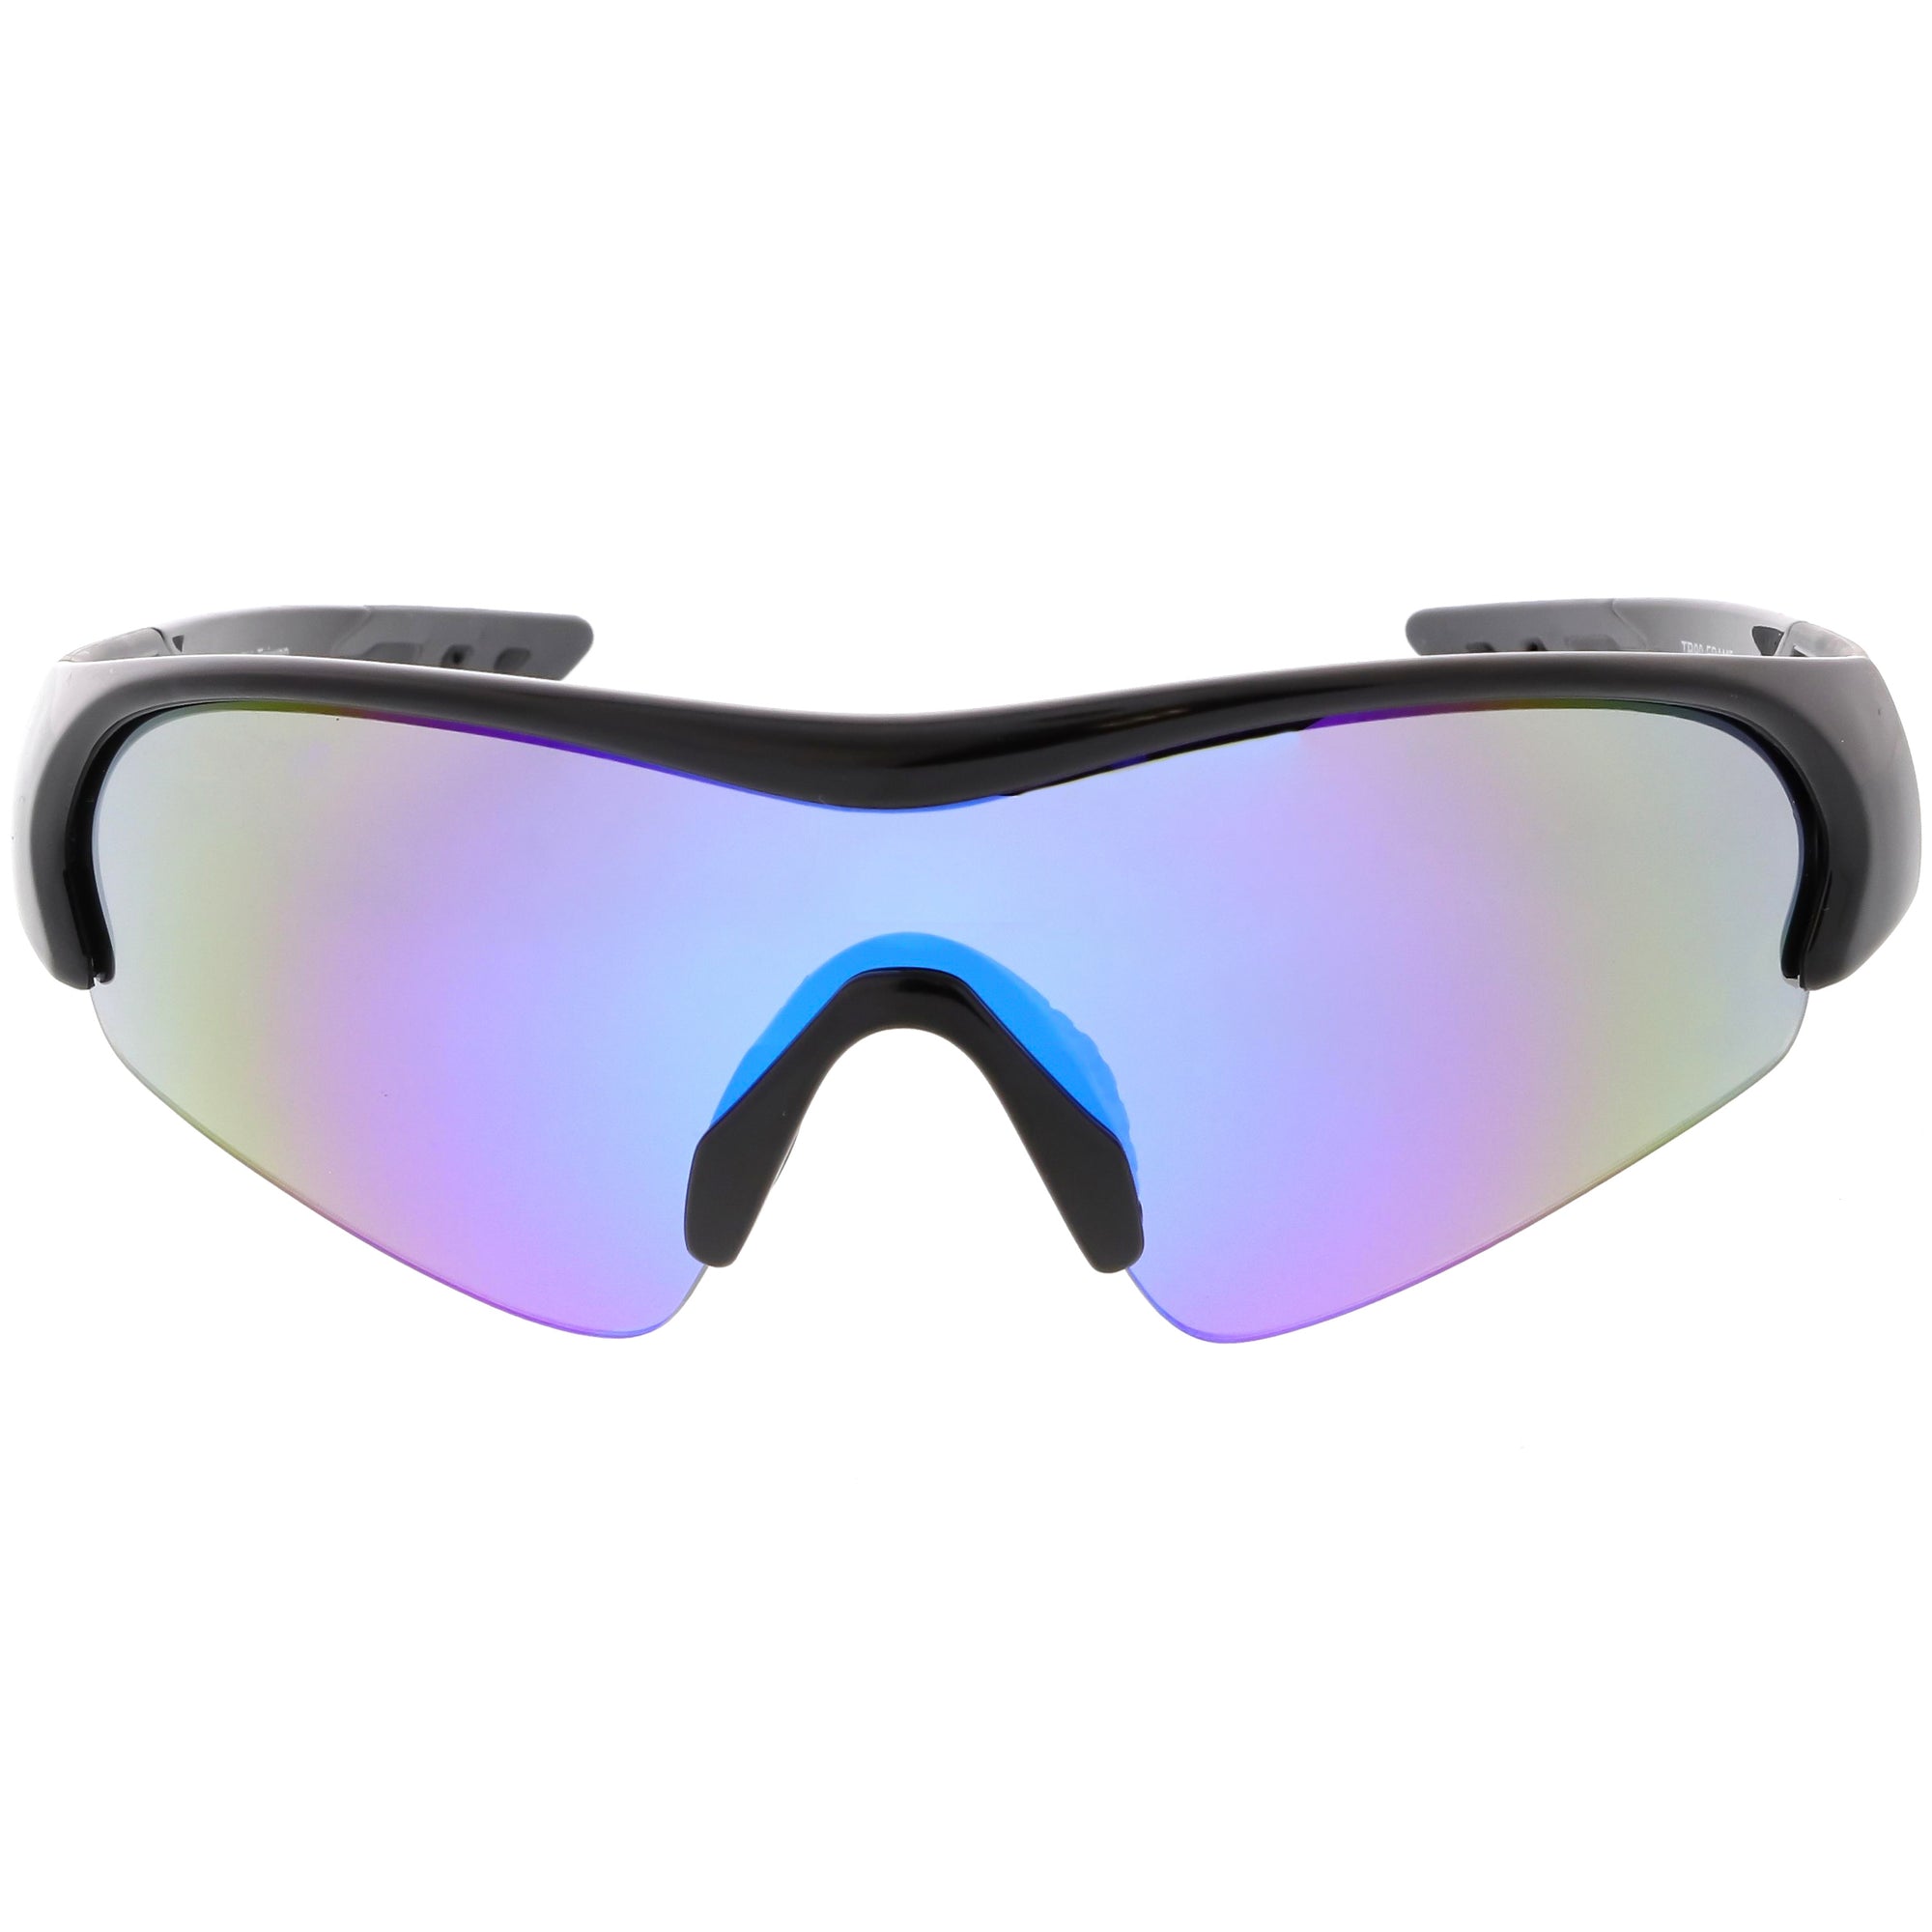 TR-90 Sports Sunglasses for Men